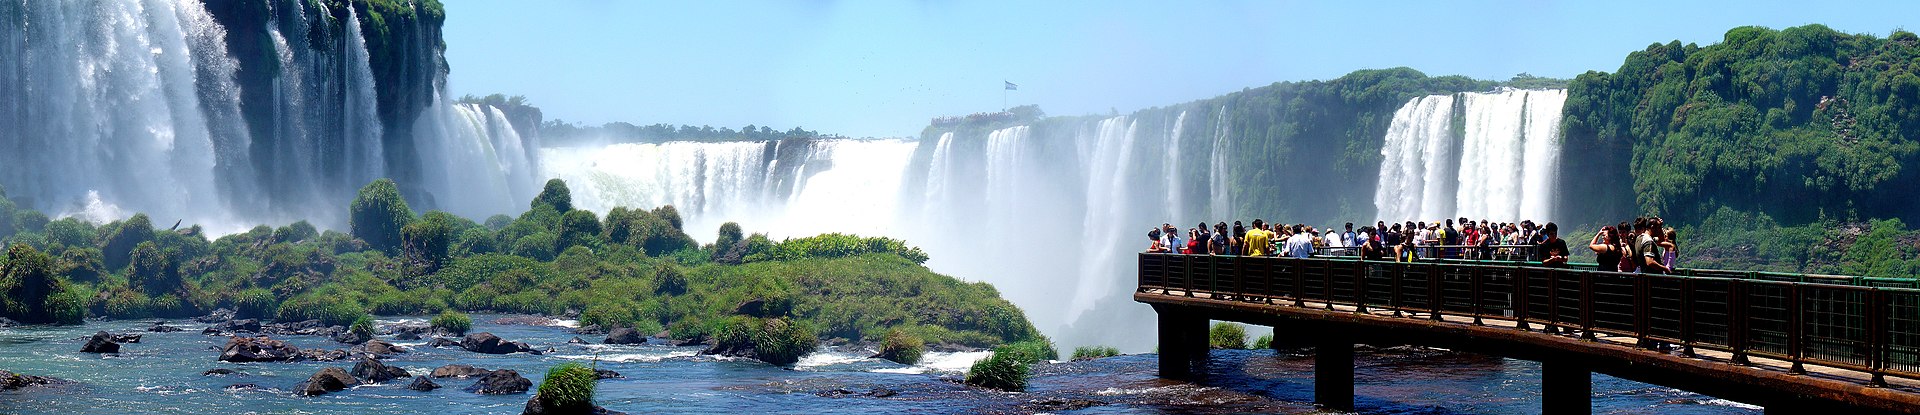 Dowrlam Iguazu, yntra Brasil hag Arghantina